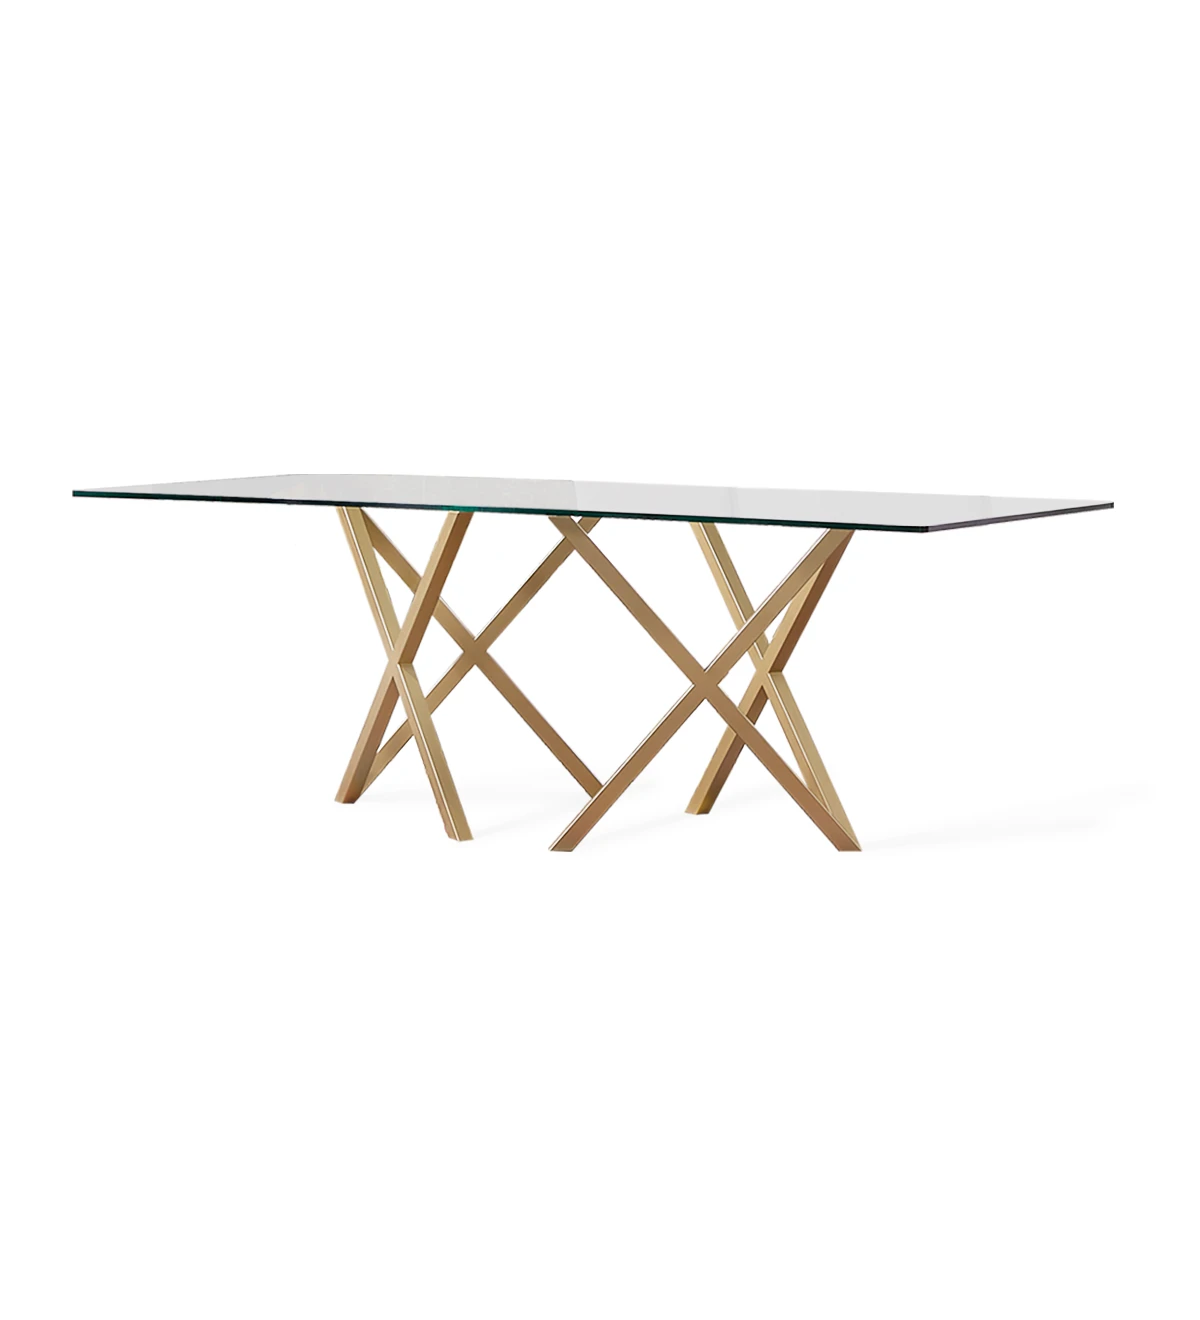 Paris rectangular dining table 200 x 98 cm, glass top, gold lacquered metal feet.